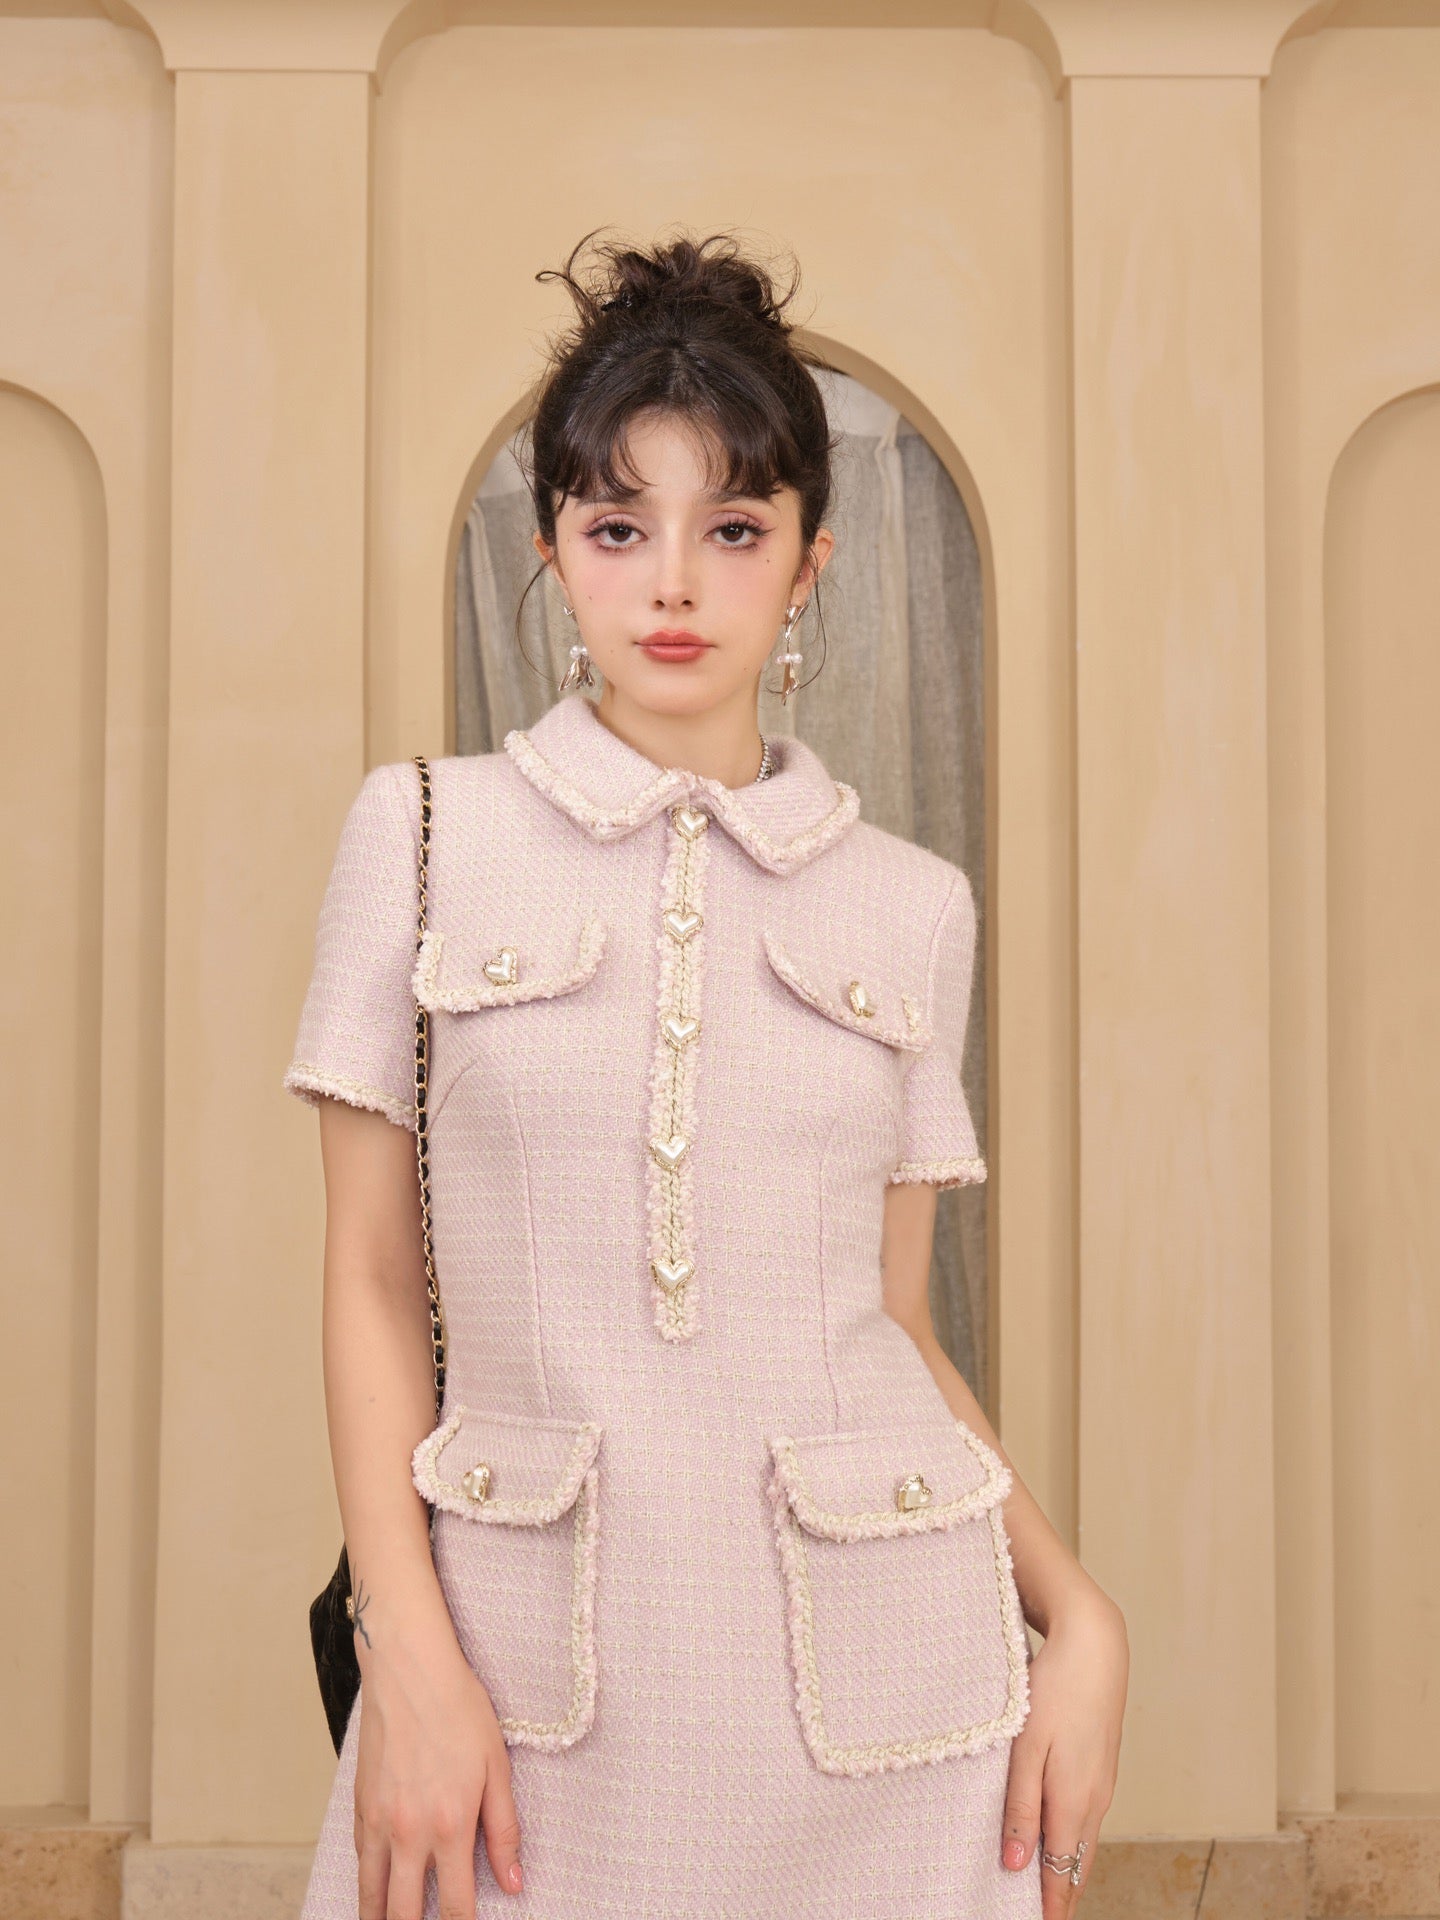 Chanel Bottoned Tweed Dress